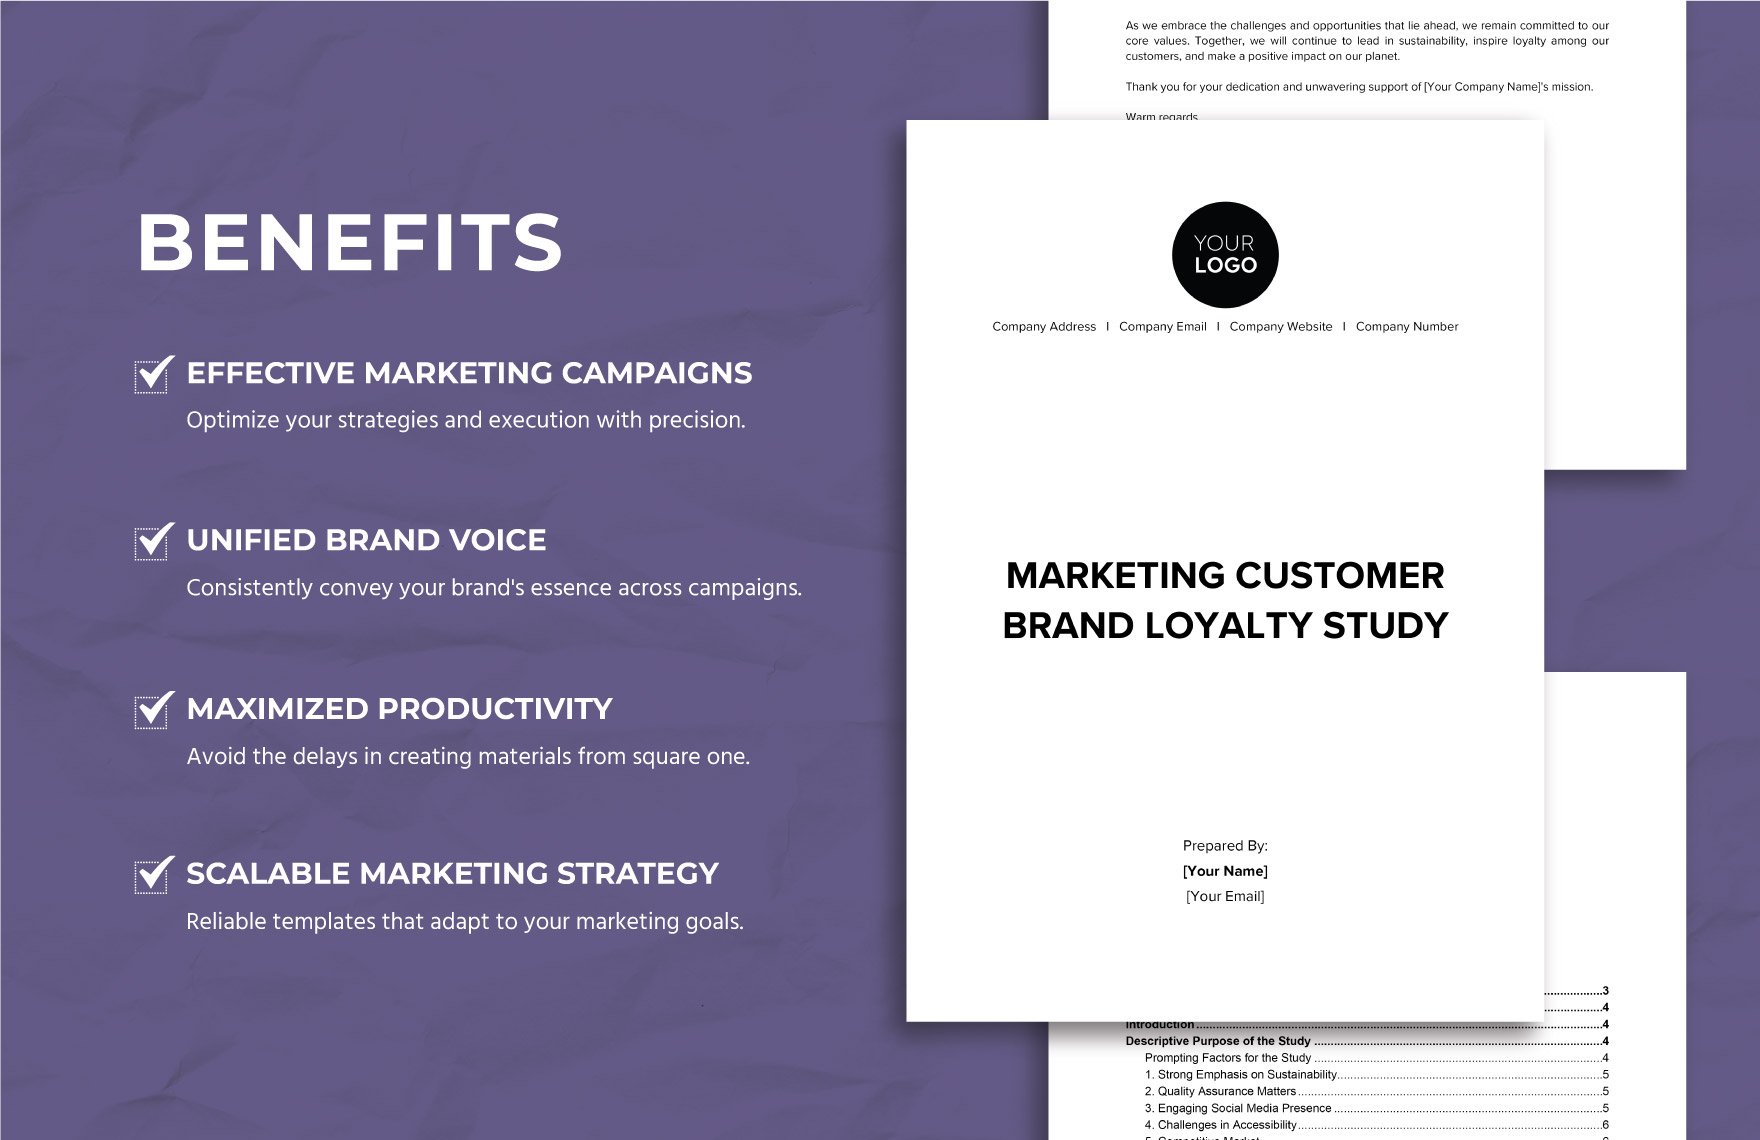 Marketing Customer Brand Loyalty Study Template